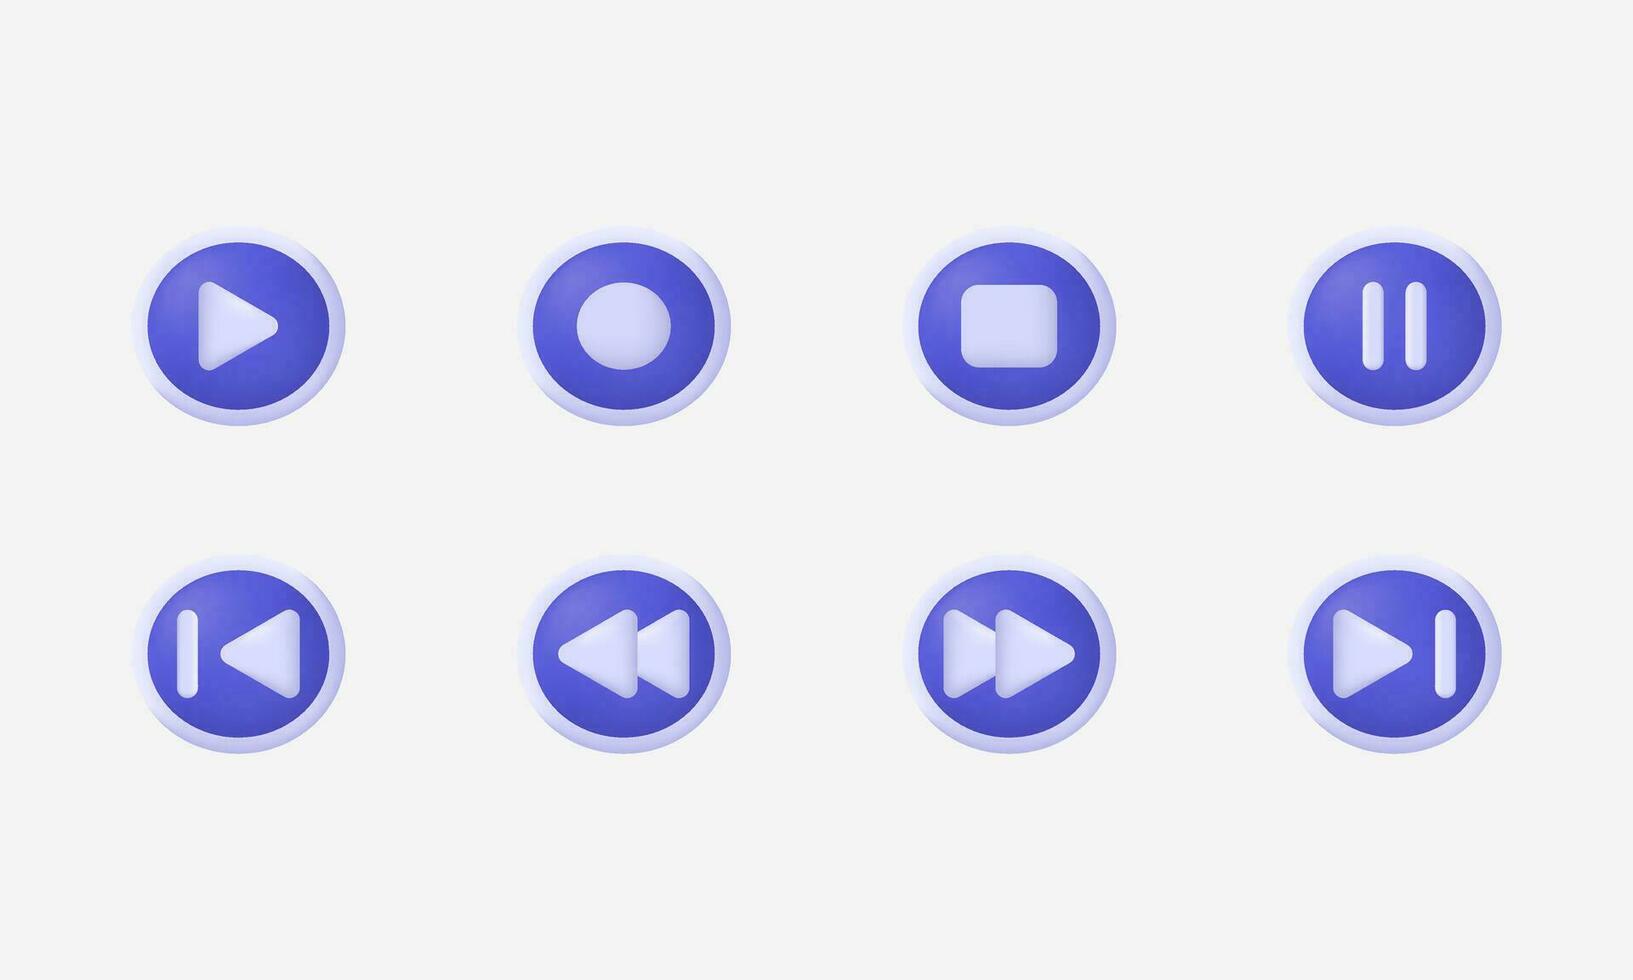 creativo moderno púrpura jugar pausa detener botones música icono 3d vector aislado en antecedentes